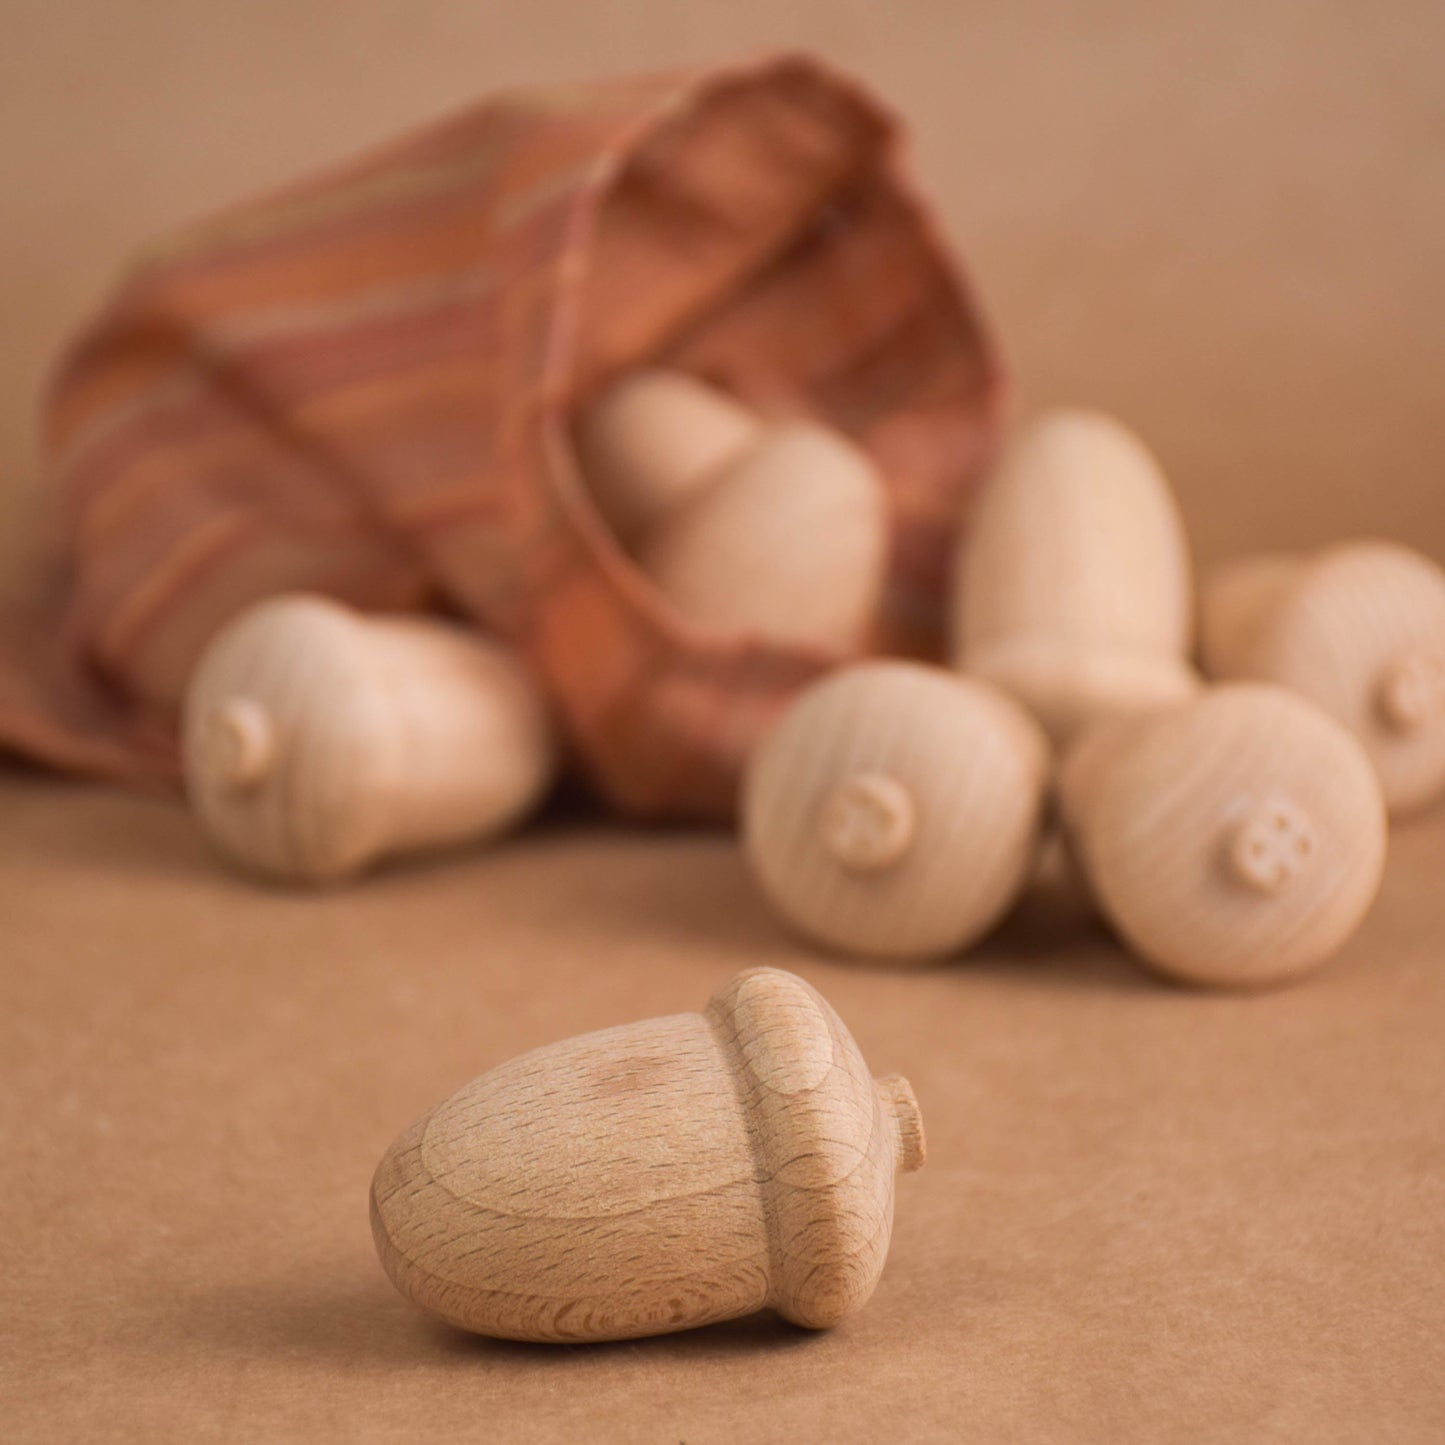 Carved Wooden Acorns for Crafts